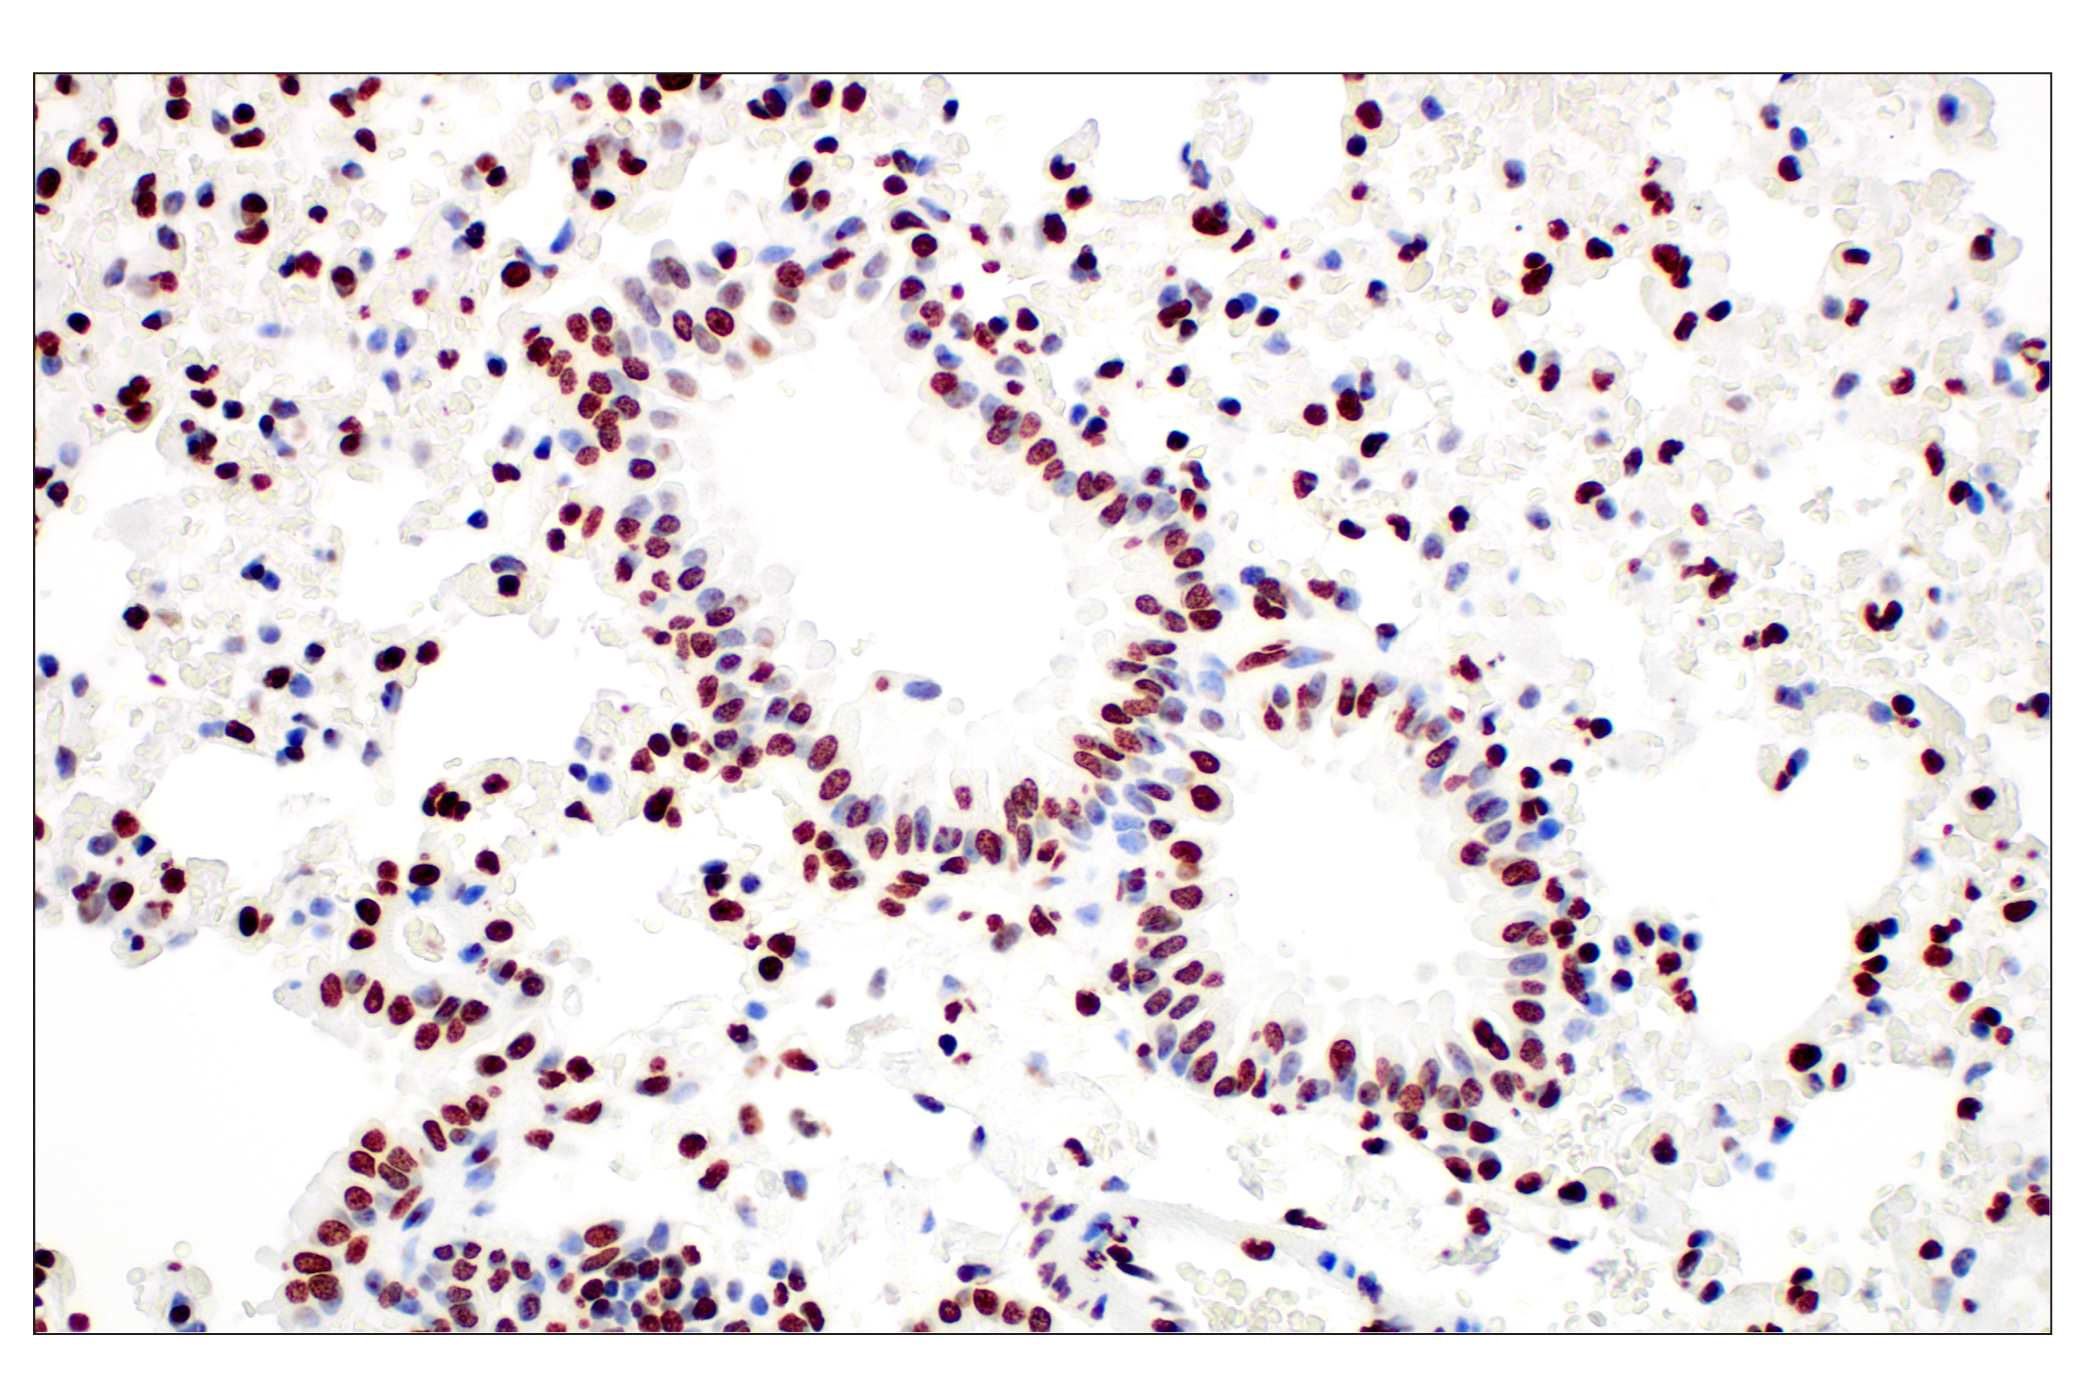  Image 34: Polycomb Group Antibody Sampler Kit